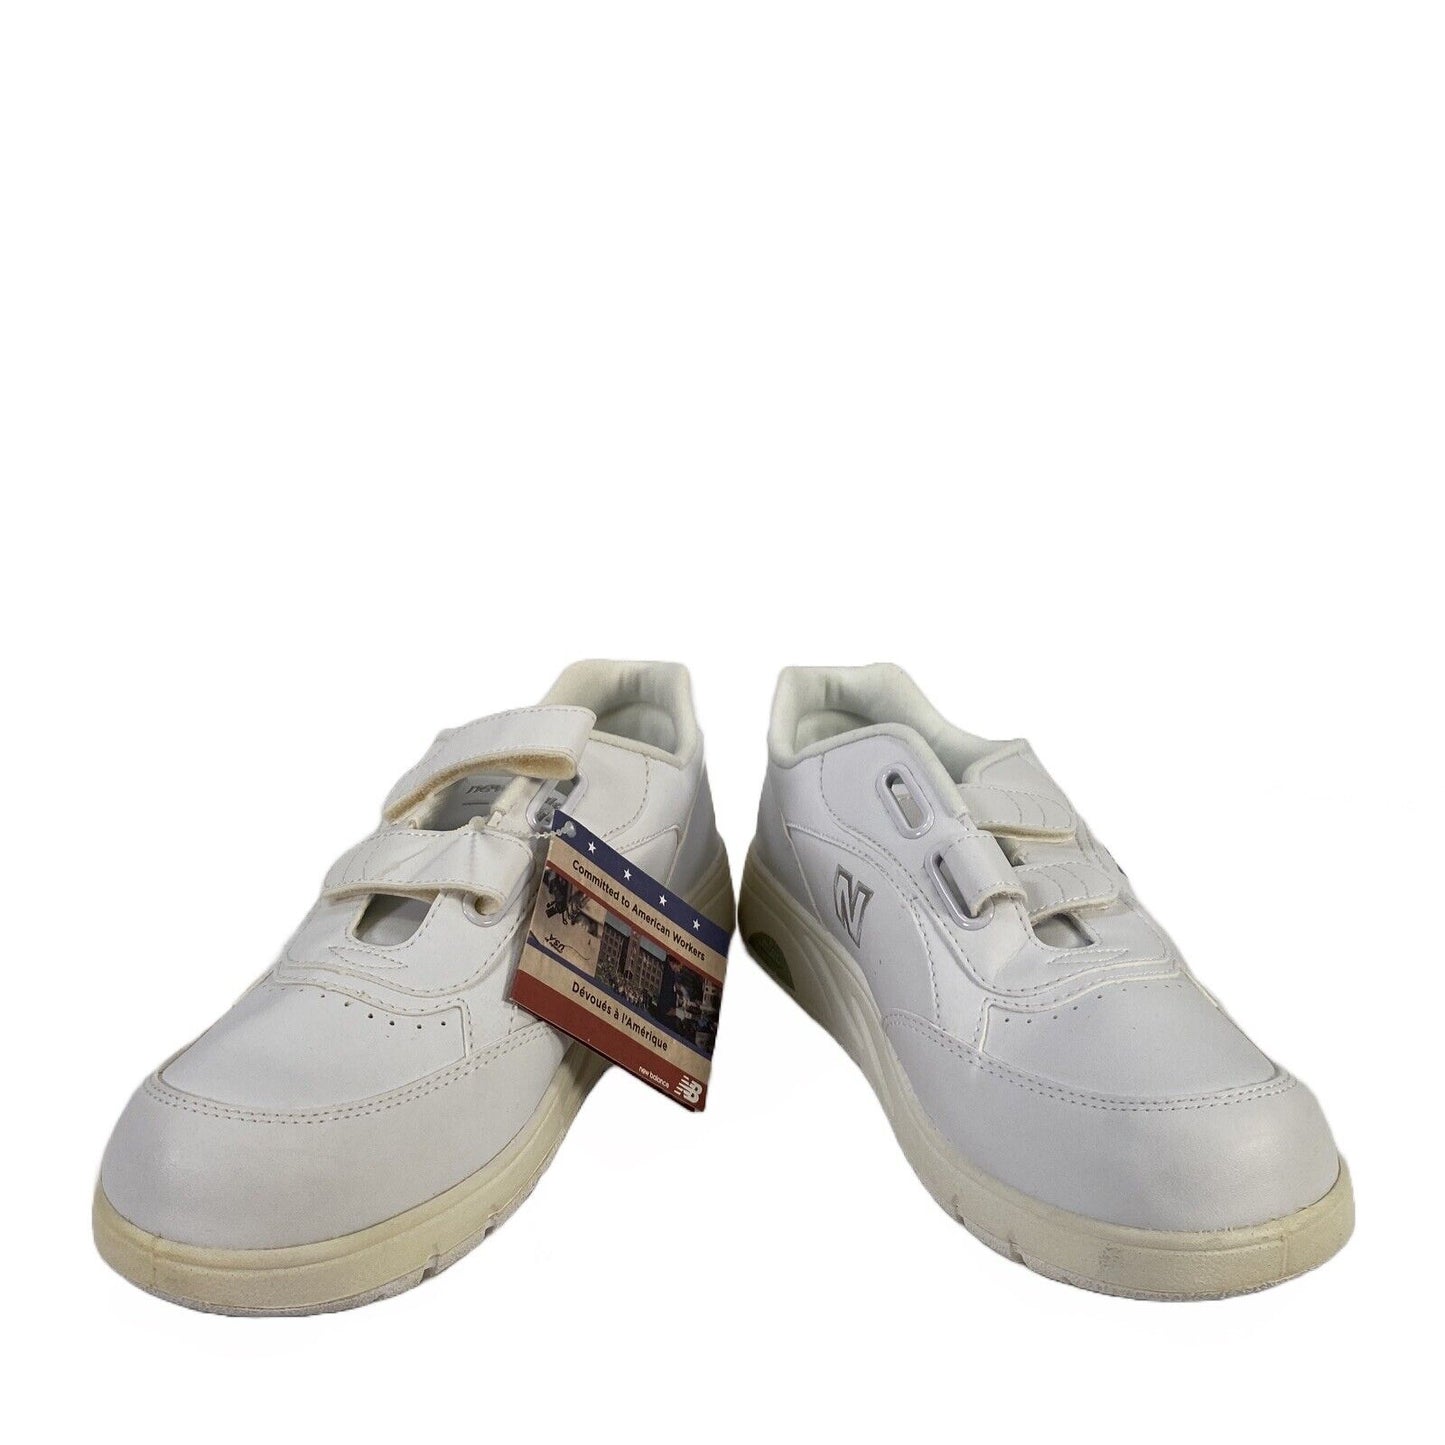 NEW New Balance Men's White 811 Comfort Walking Shoes MW811VW - 10 D